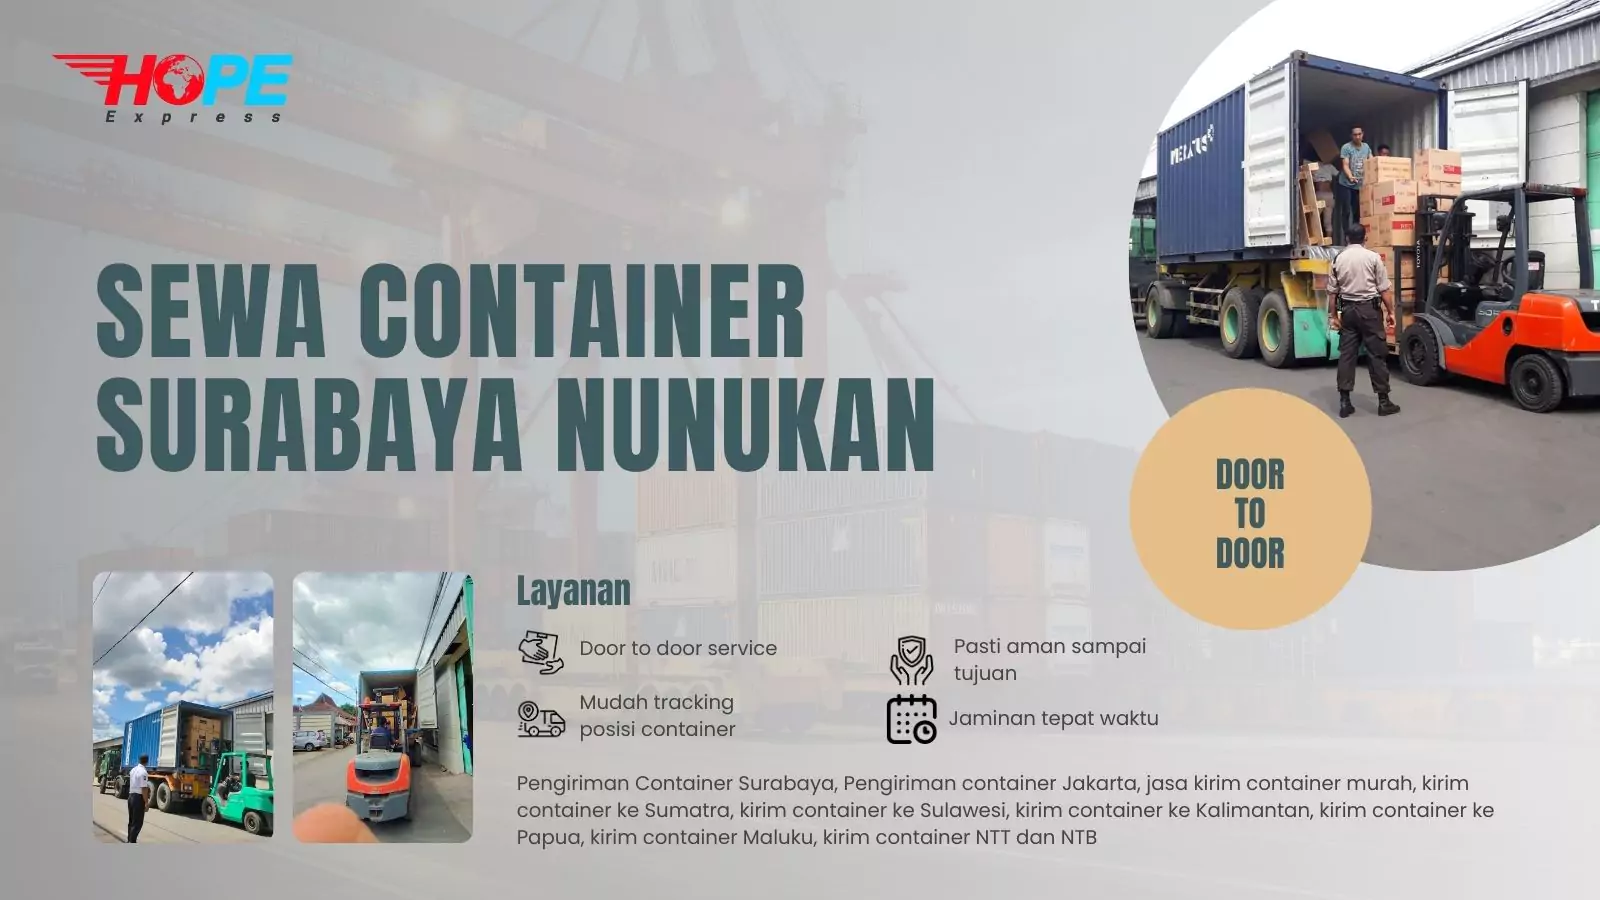 Sewa Container Surabaya Nunukan